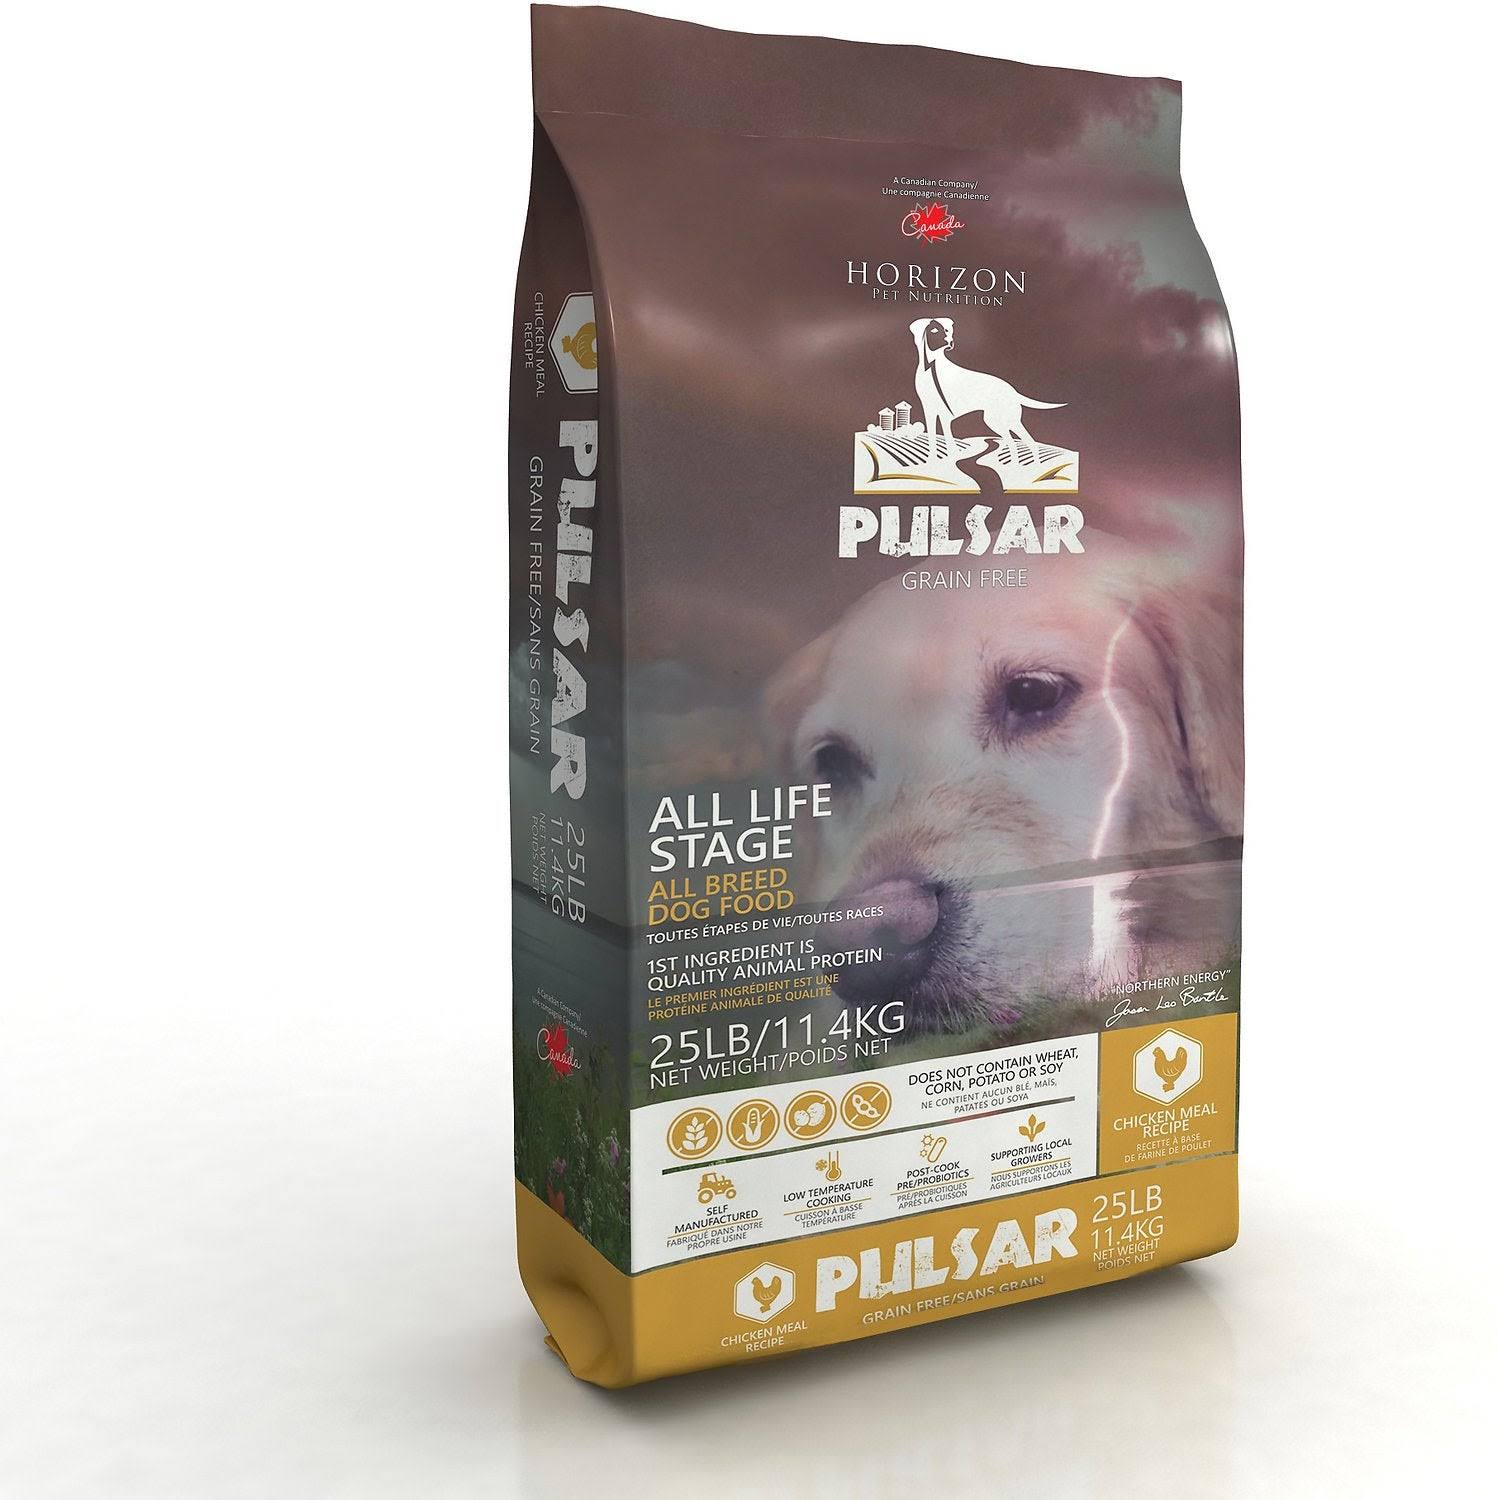 Pulsar Chicken Grain Free Dog Food [8.8lb]